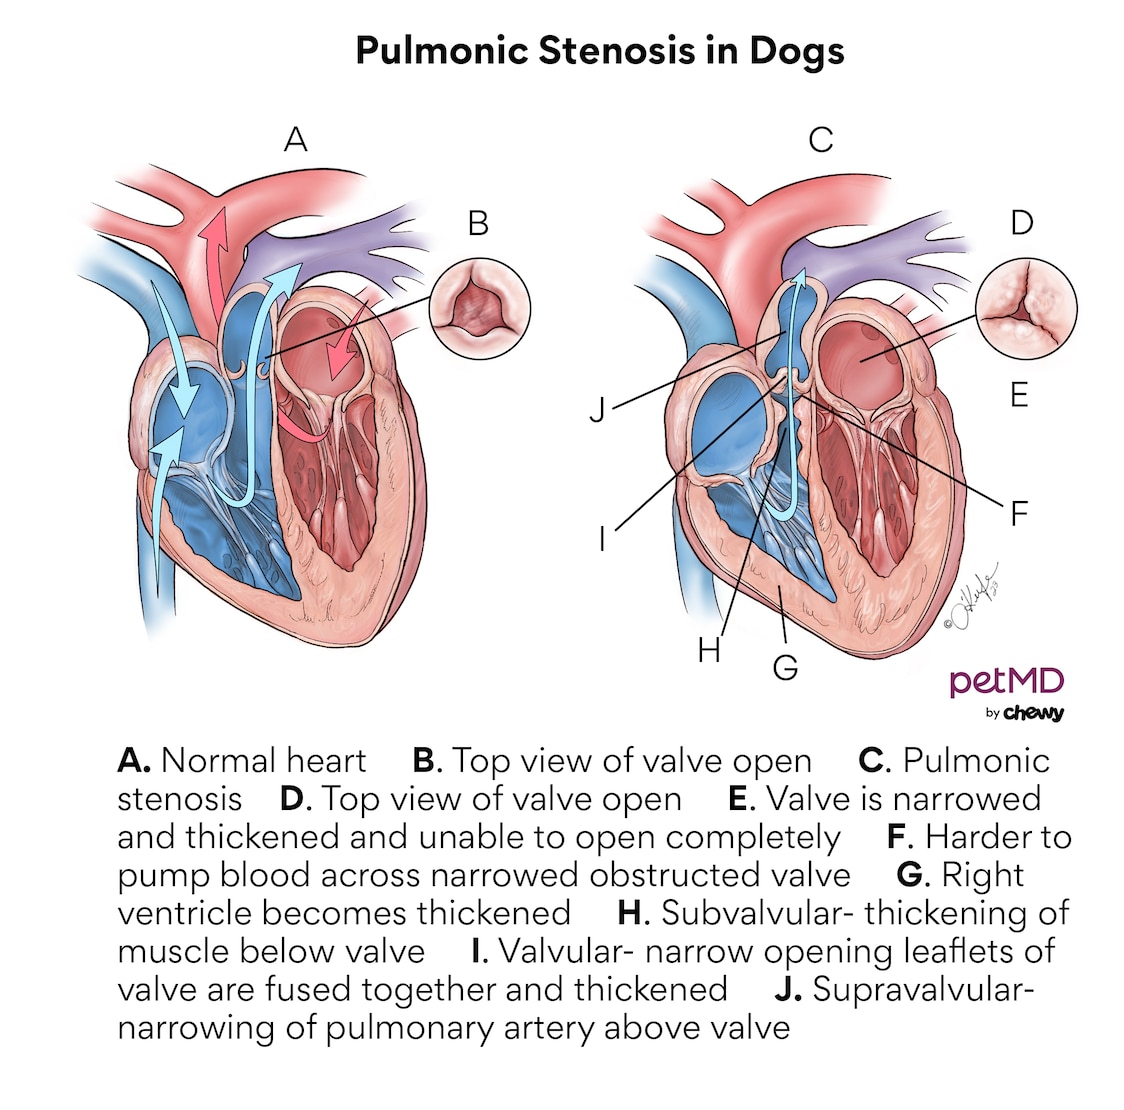 Pulmonic stenosis in dogs